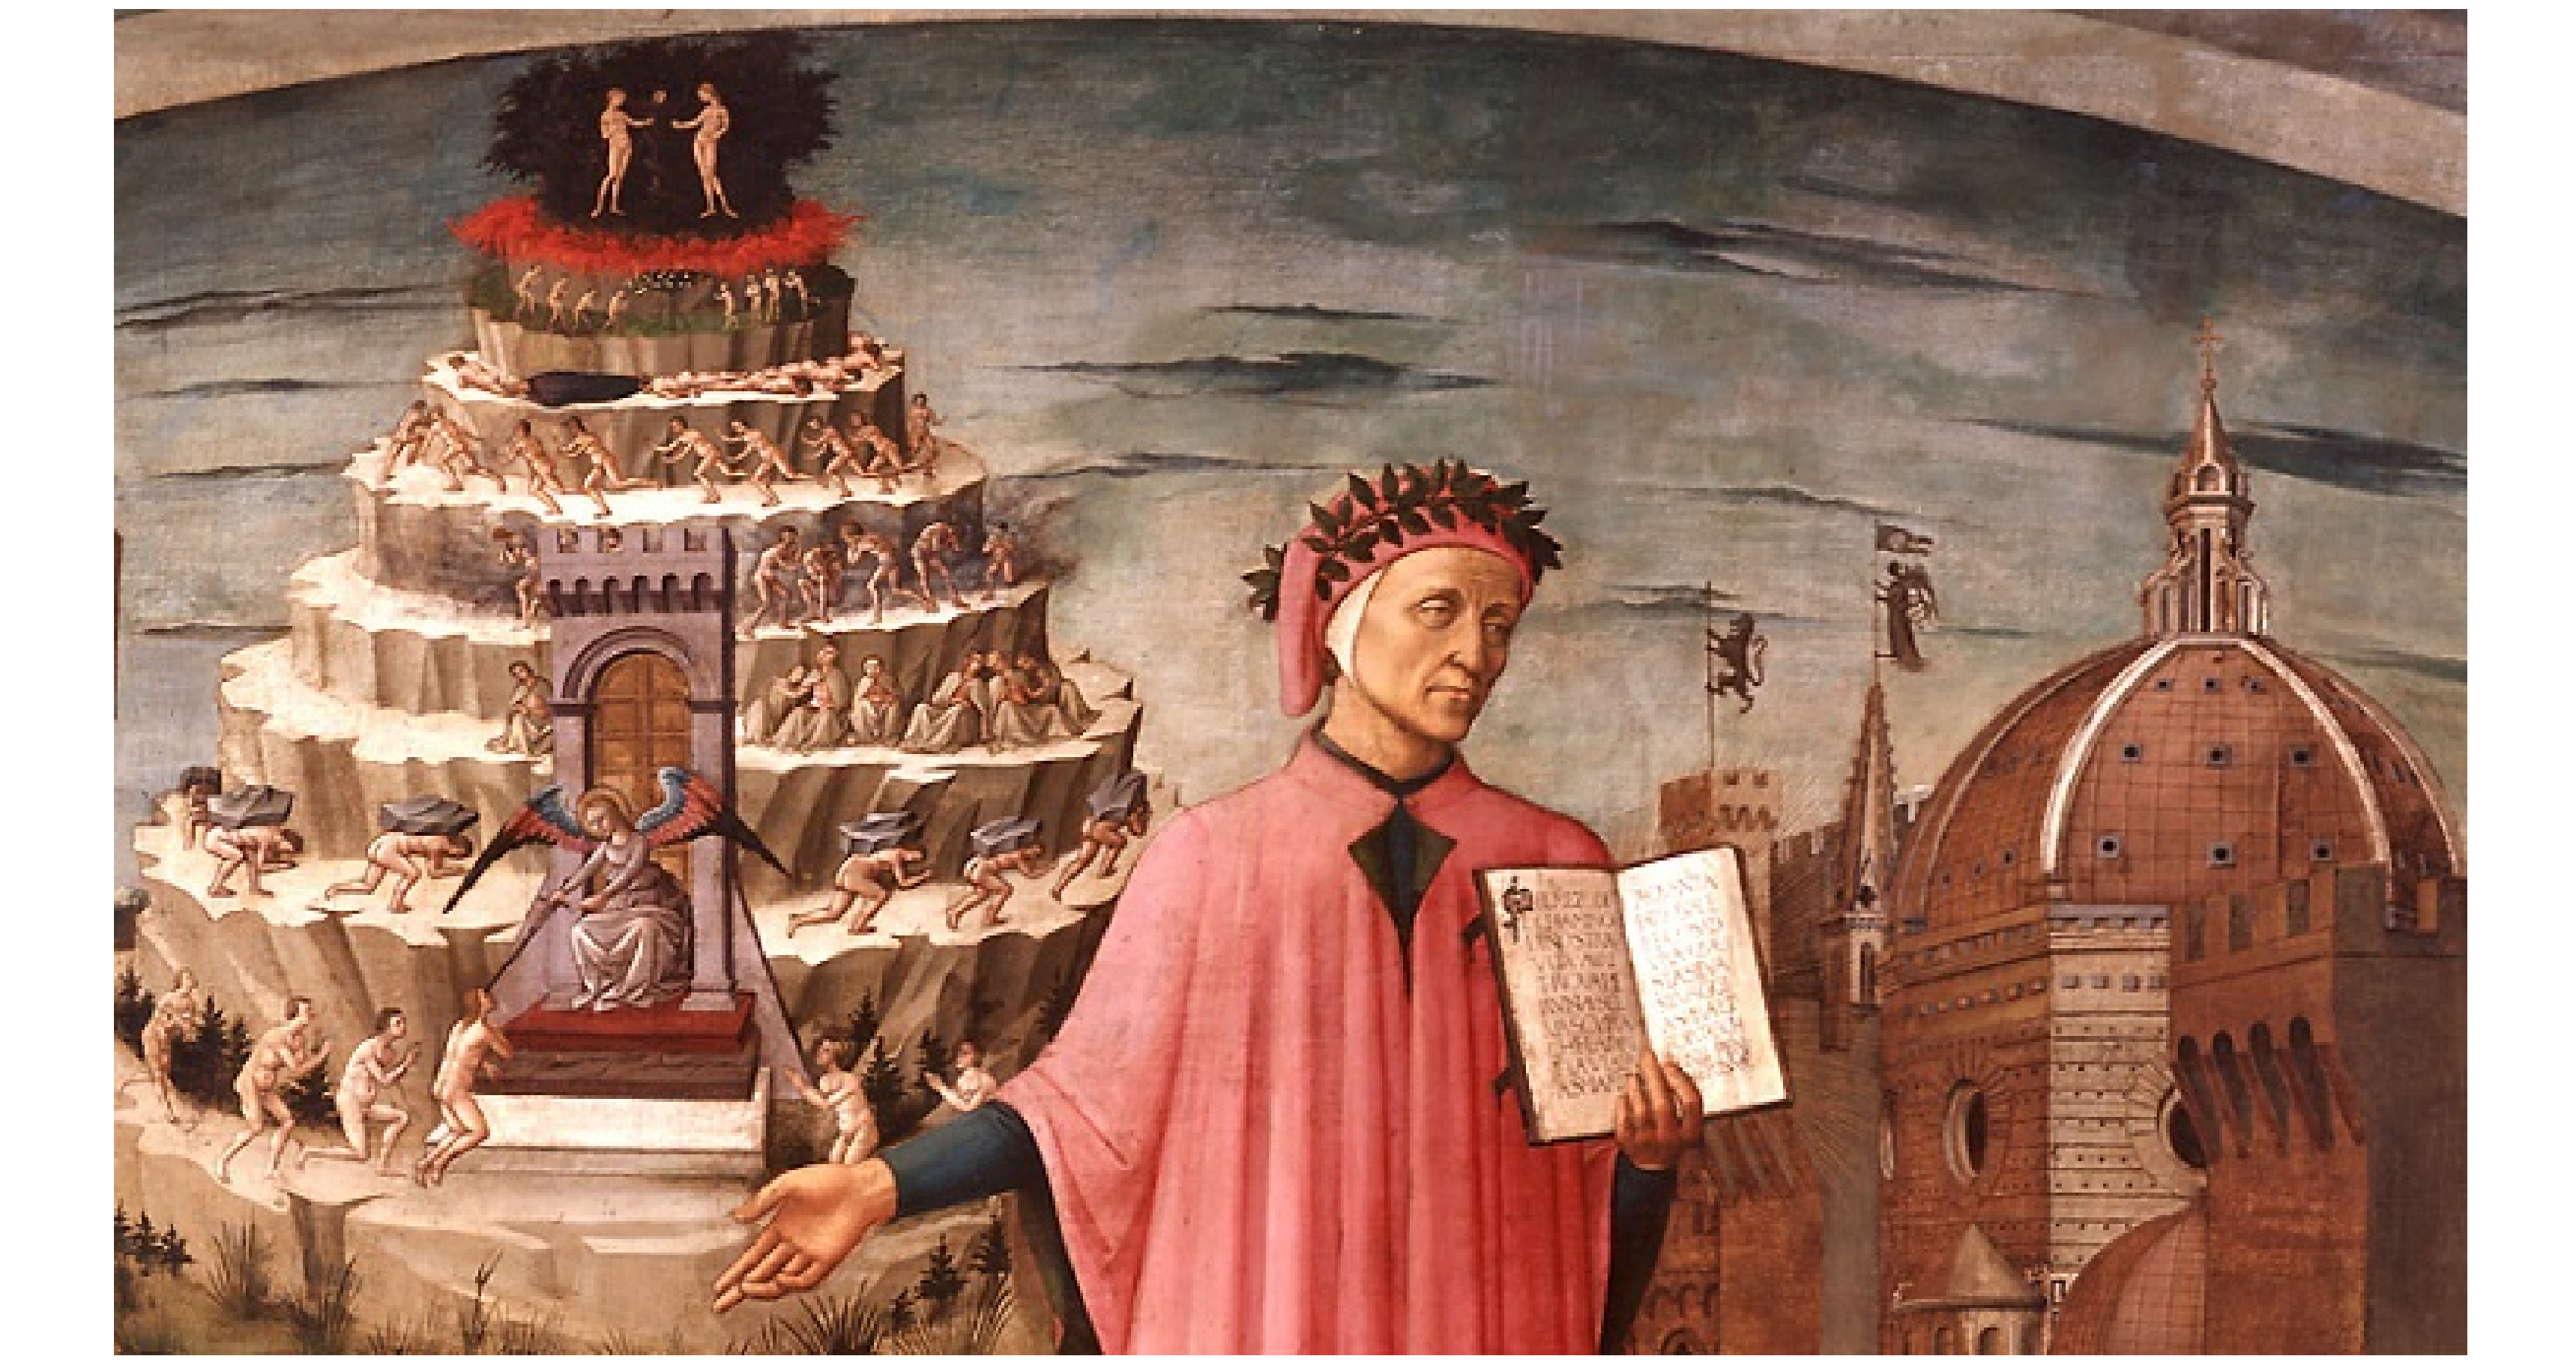 Поэма данте алигьери. Доменико ди Микелино Данте. Микелино Данте фреска. Данте Алигьери "Божественная комедия". Доменико ди Микелино - "Данте и три царства" - 1465.